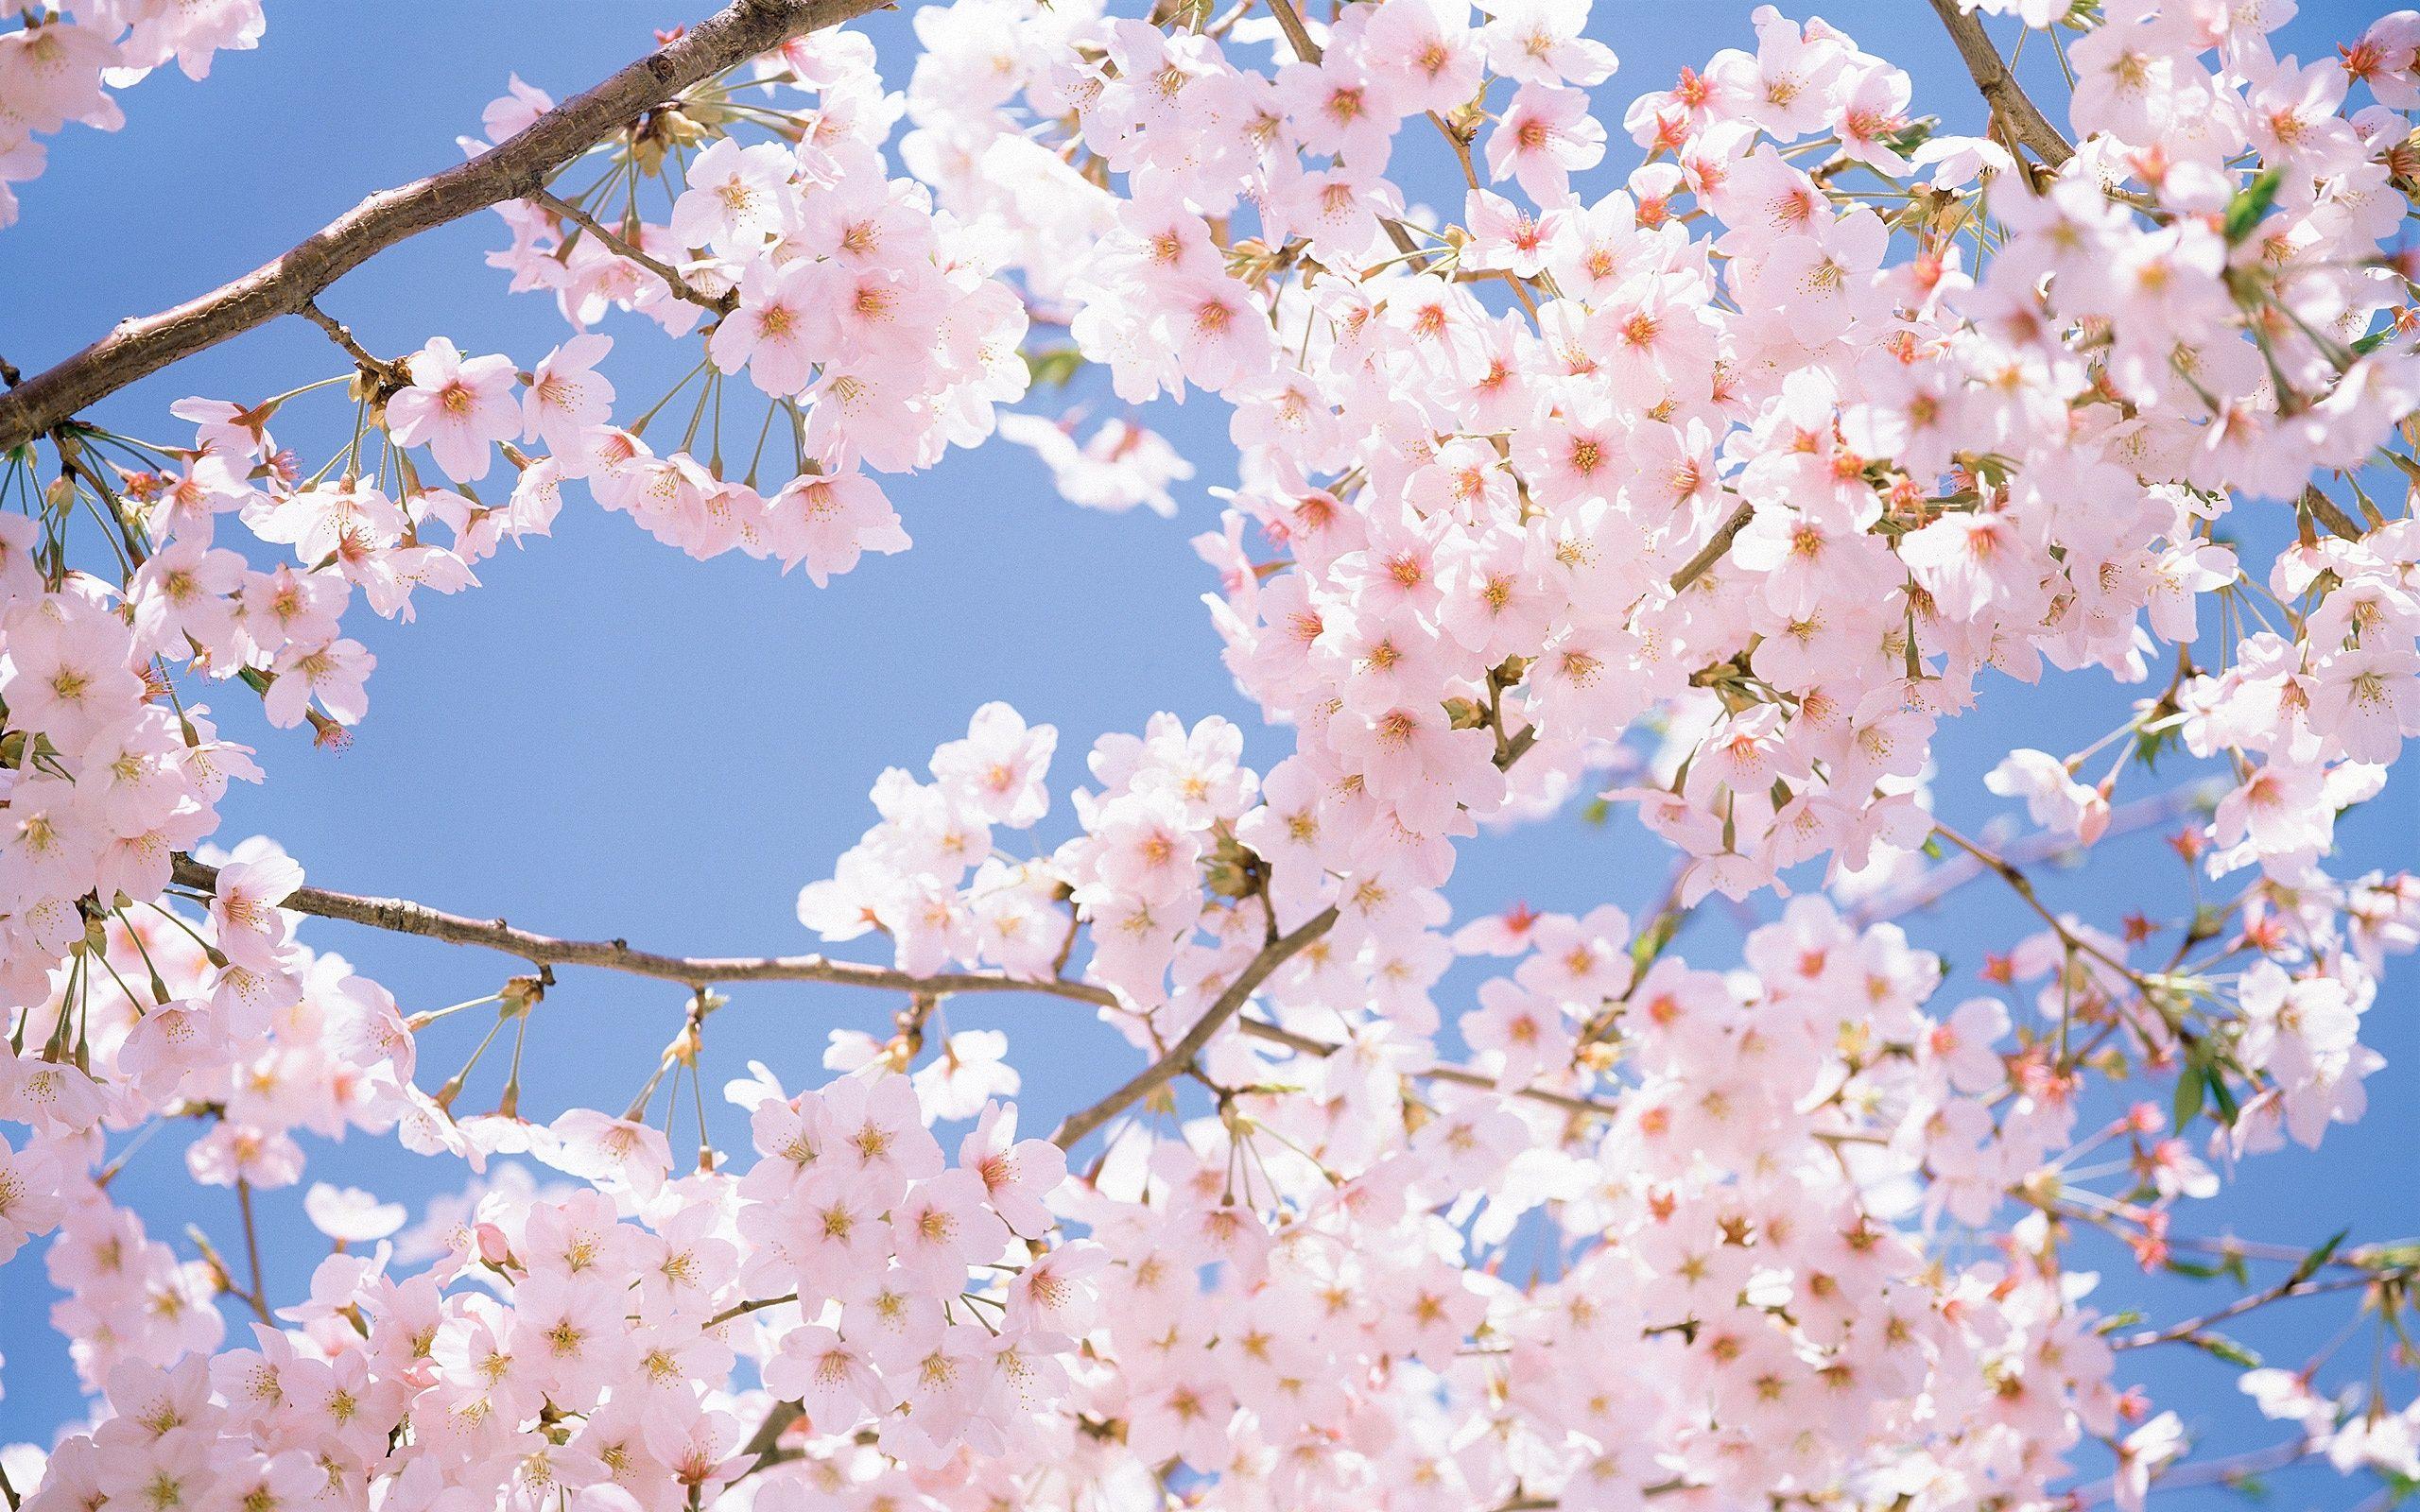 Cherry Blossom Tree Wallpaper. Picture. Cherry blossom wallpaper, Flower wallpaper, Apple blossom flower